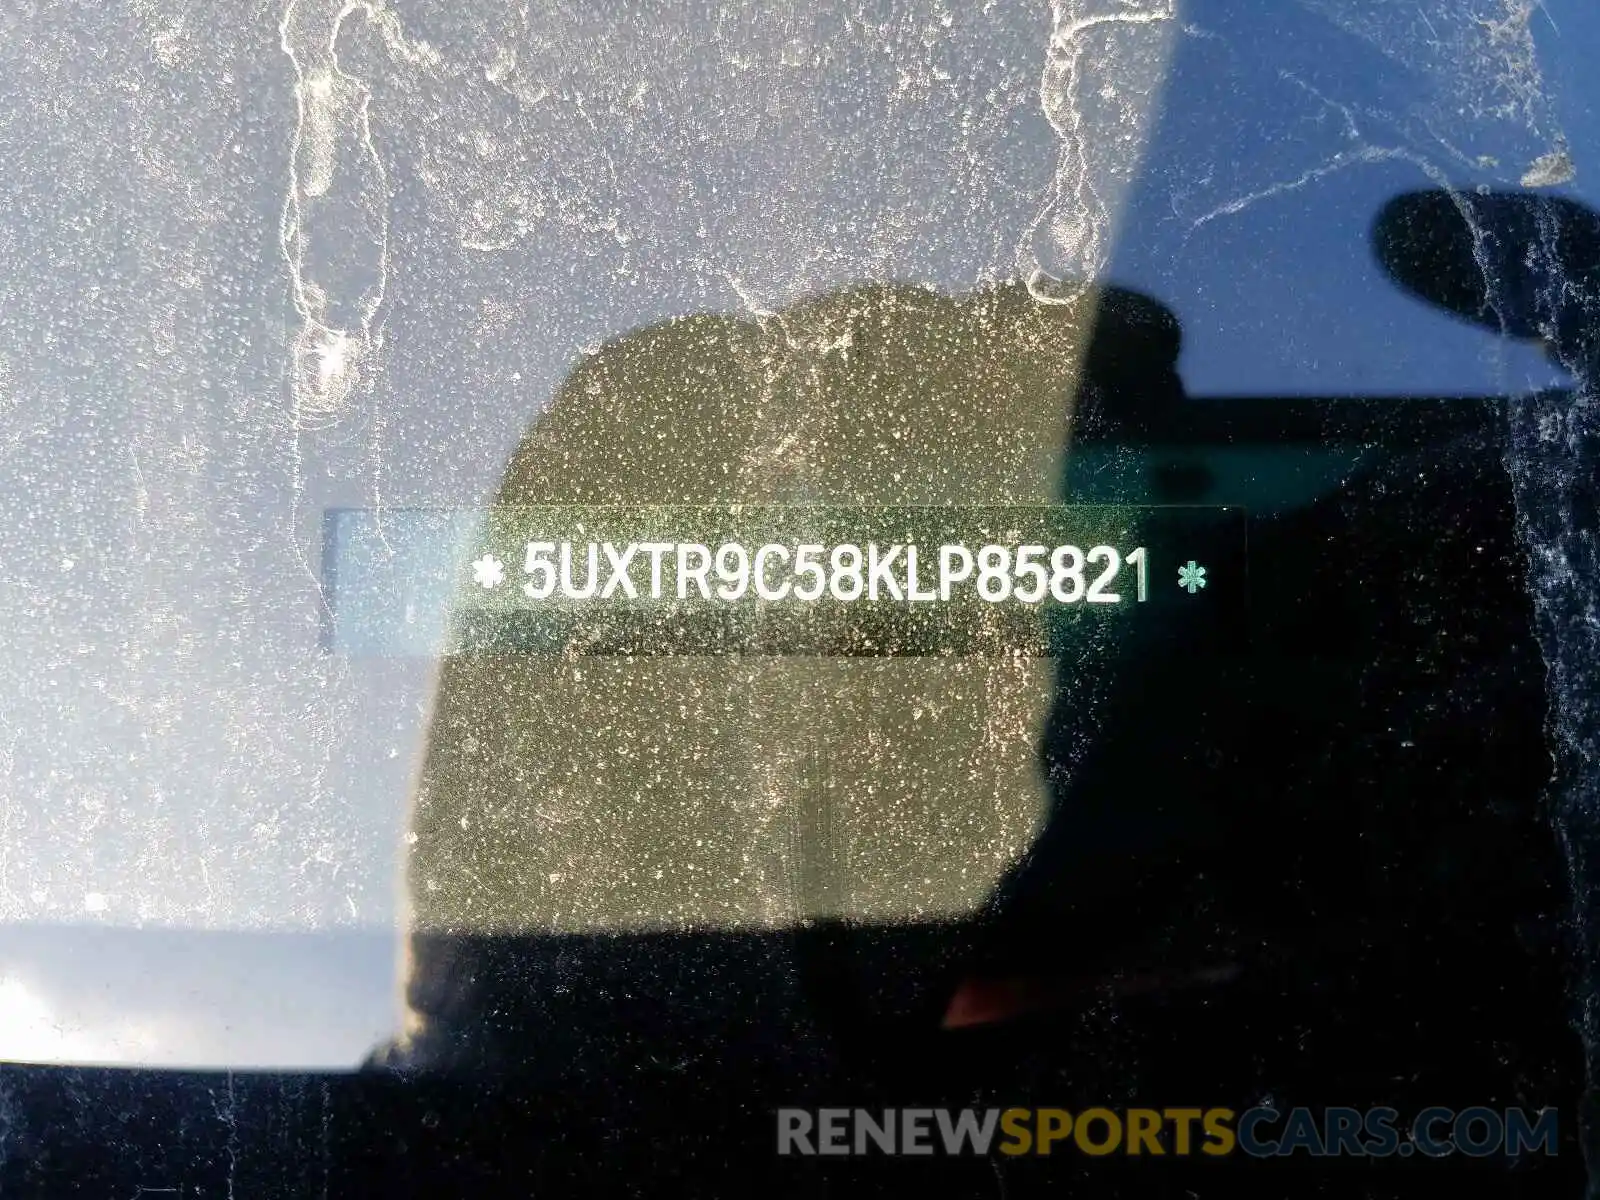 10 Photograph of a damaged car 5UXTR9C58KLP85821 BMW X3 2019